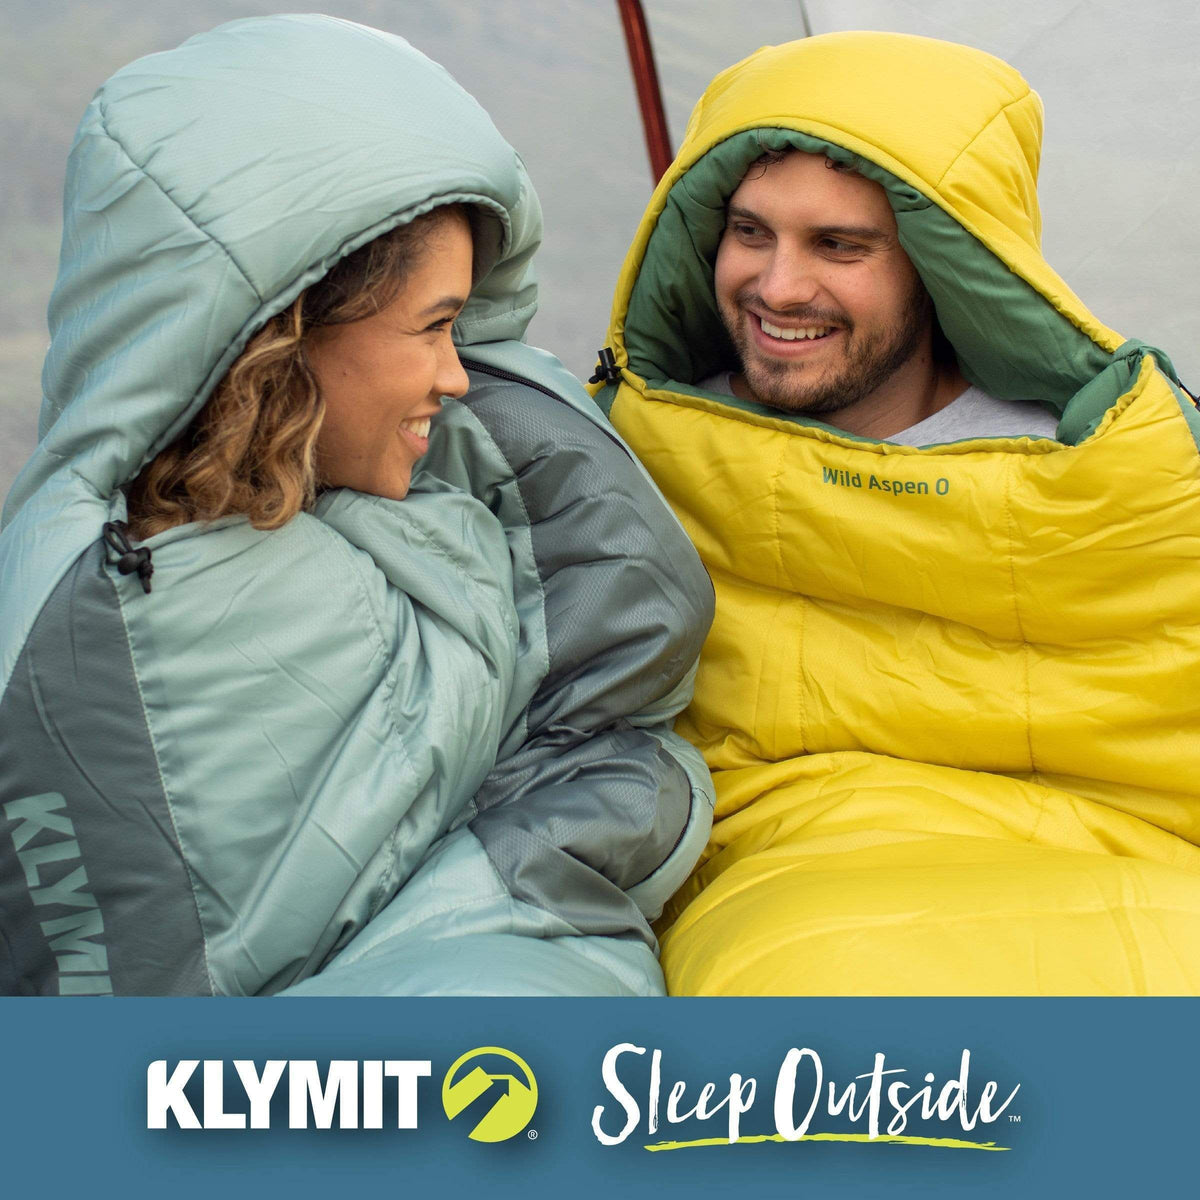 Klymit Camping Gear Wild Aspen 0 Sleeping Bags by Klymit